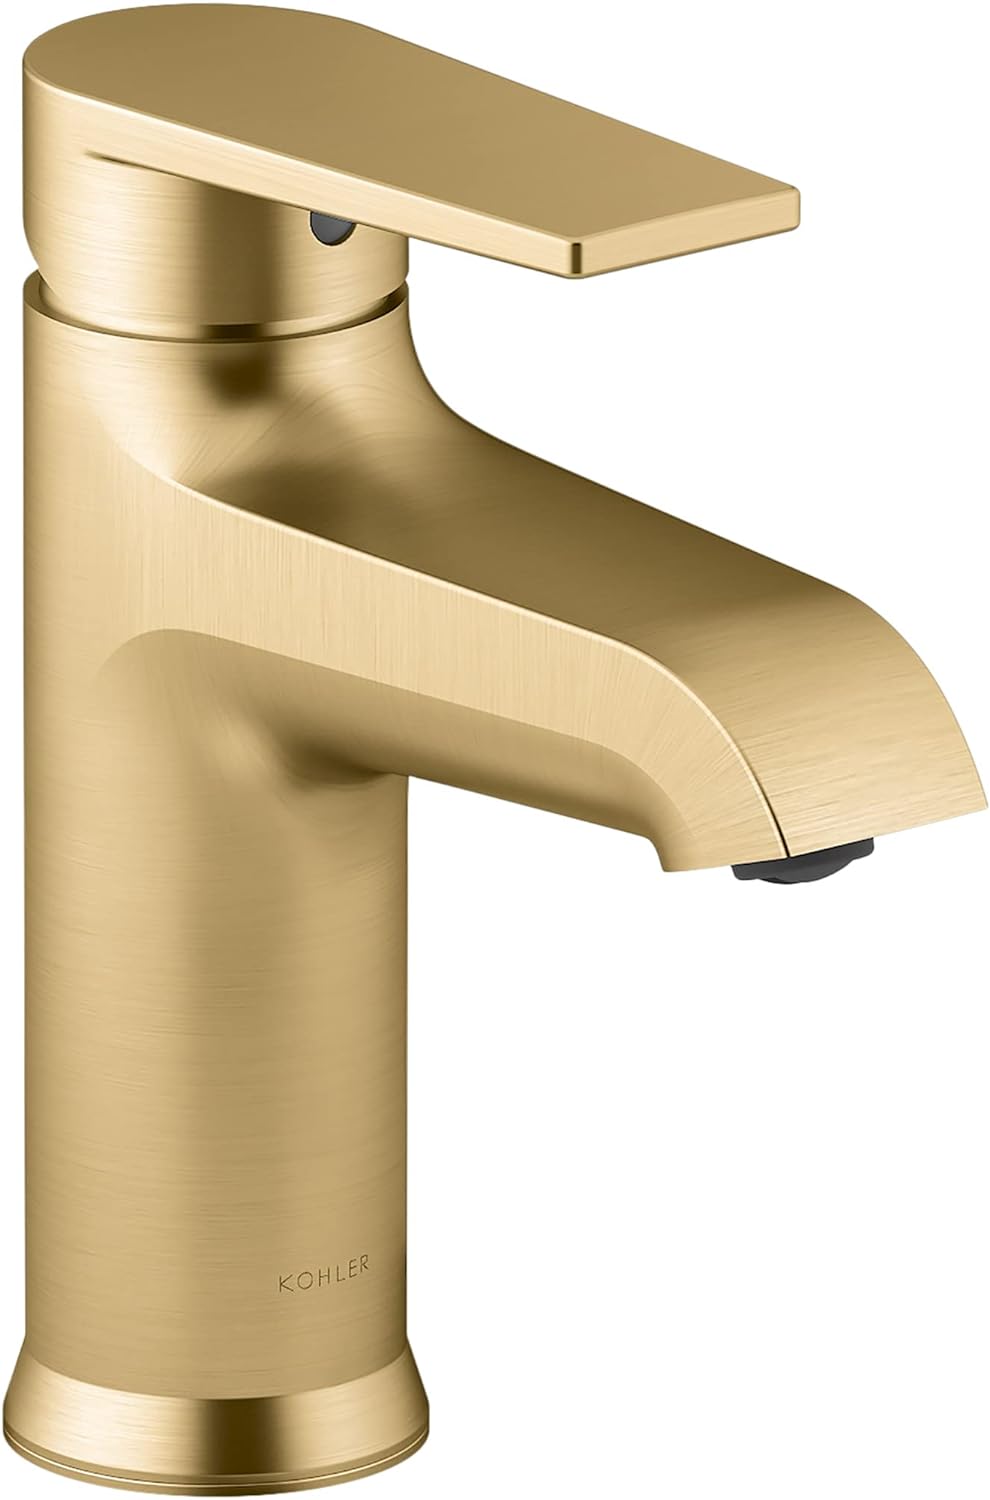 single control kohler bathroom faucet